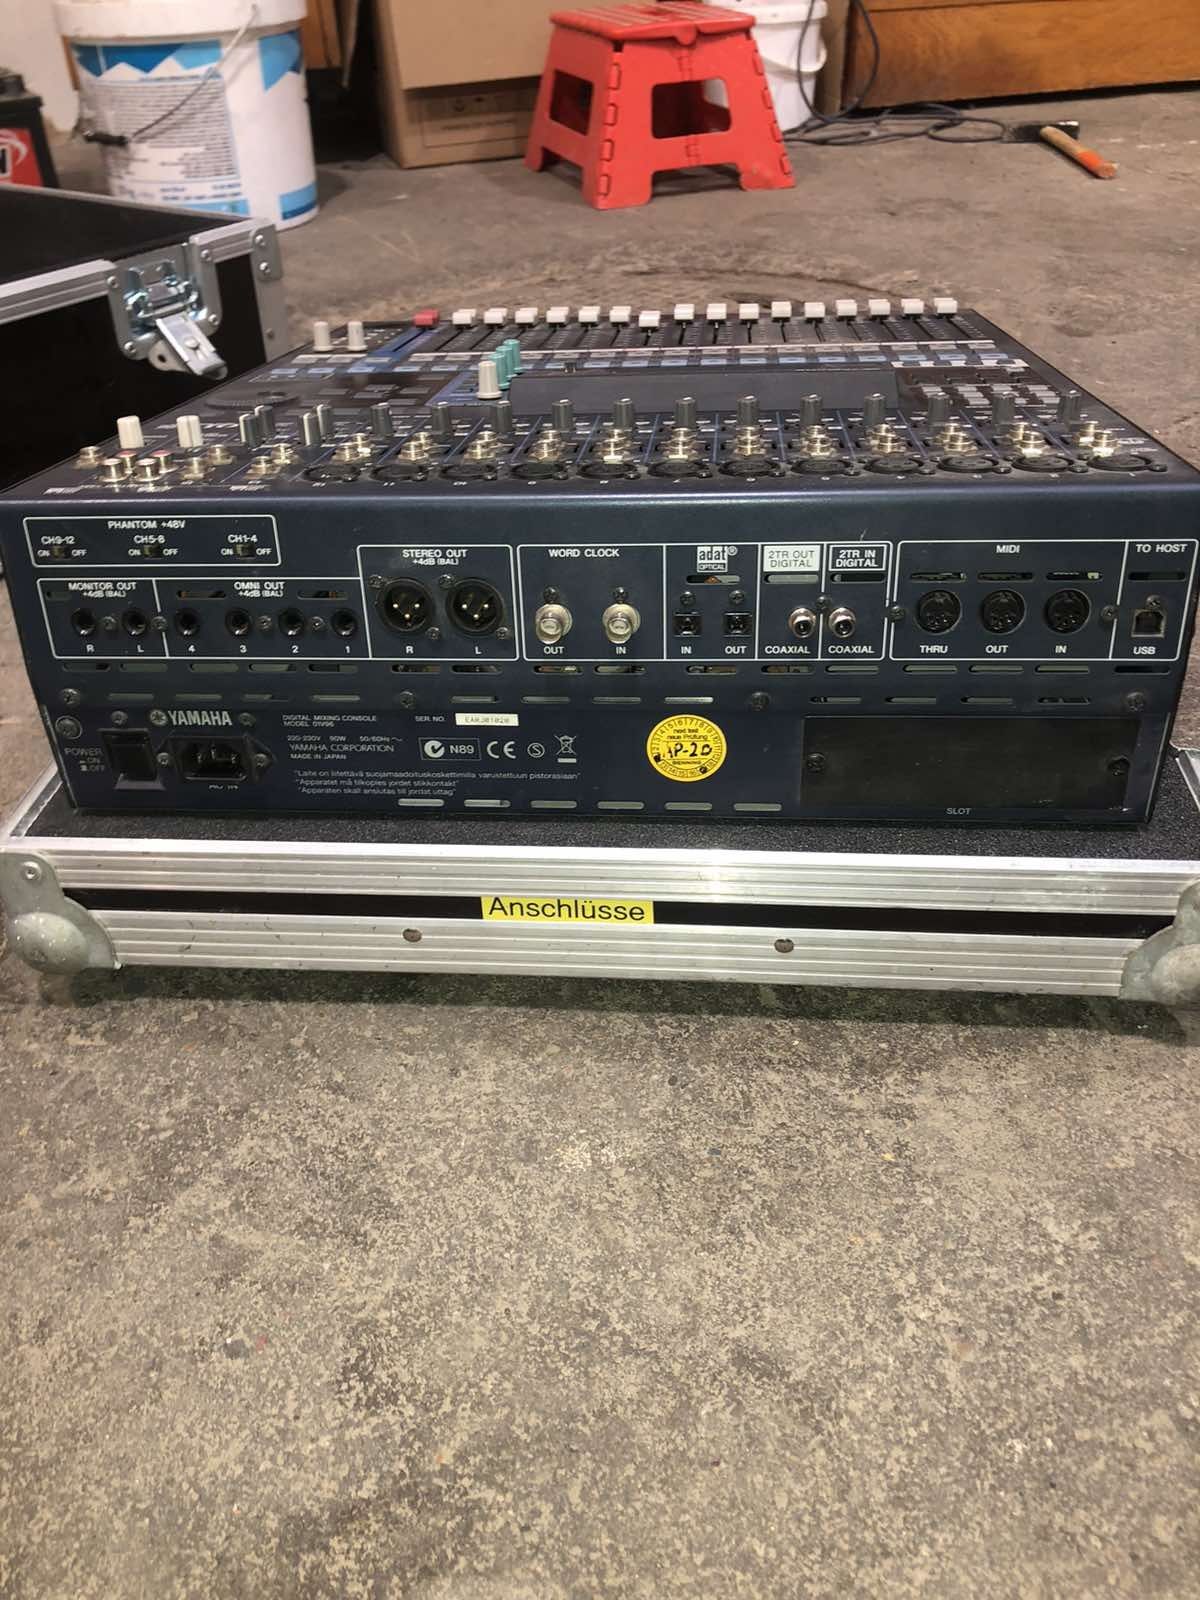 Yamaha 01V96 Digital Mixer